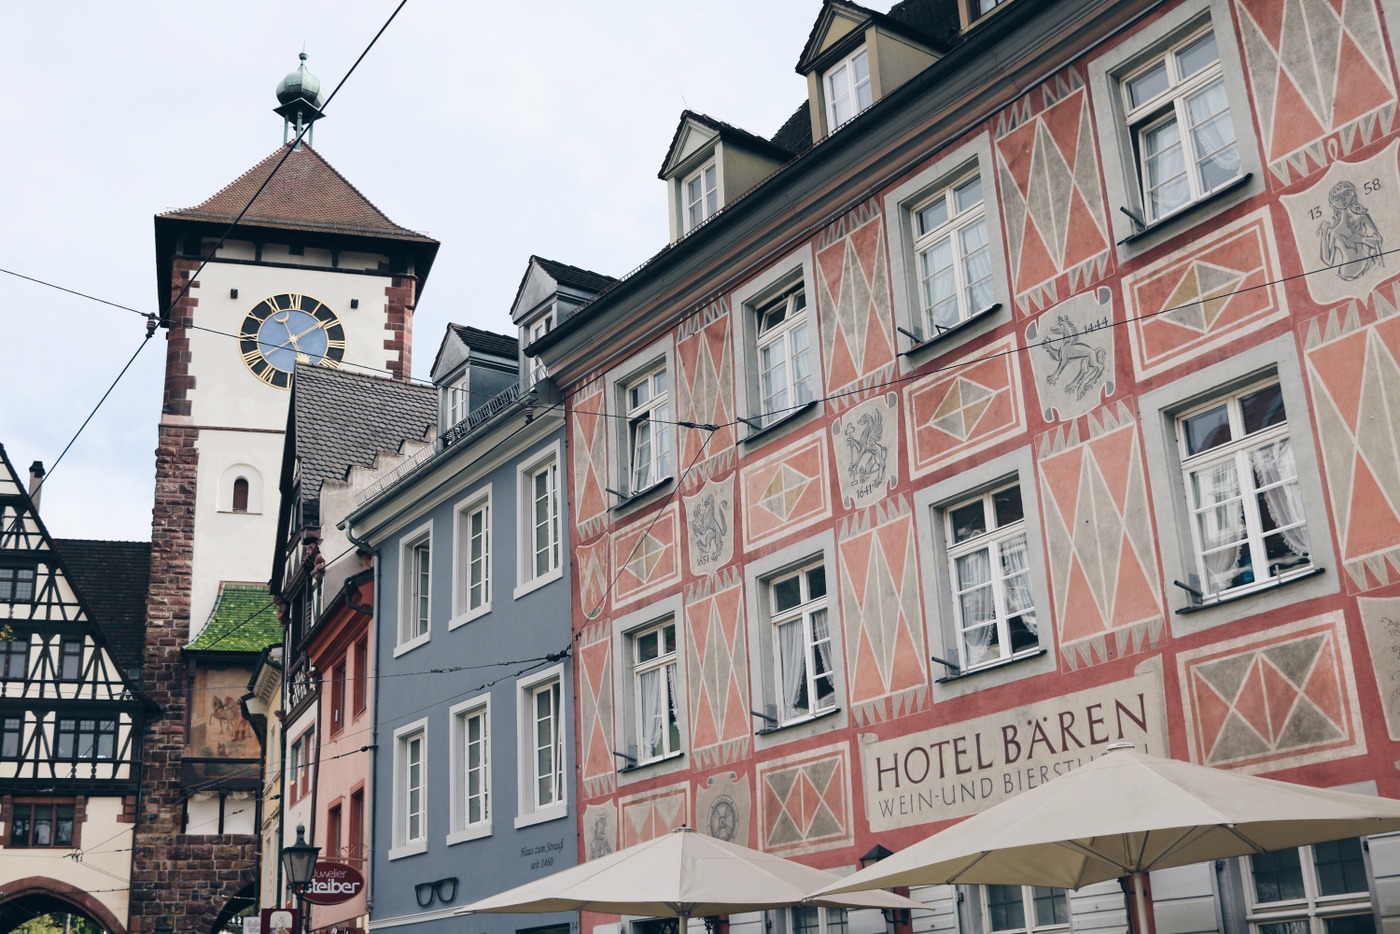 Freiburg-mrs-brightside-rosavivi-instagram-blogger-travelblog-traveldiary-fotodiary-freiburg-im-breisgau-germany-deutschland-ausflug-kurztrip